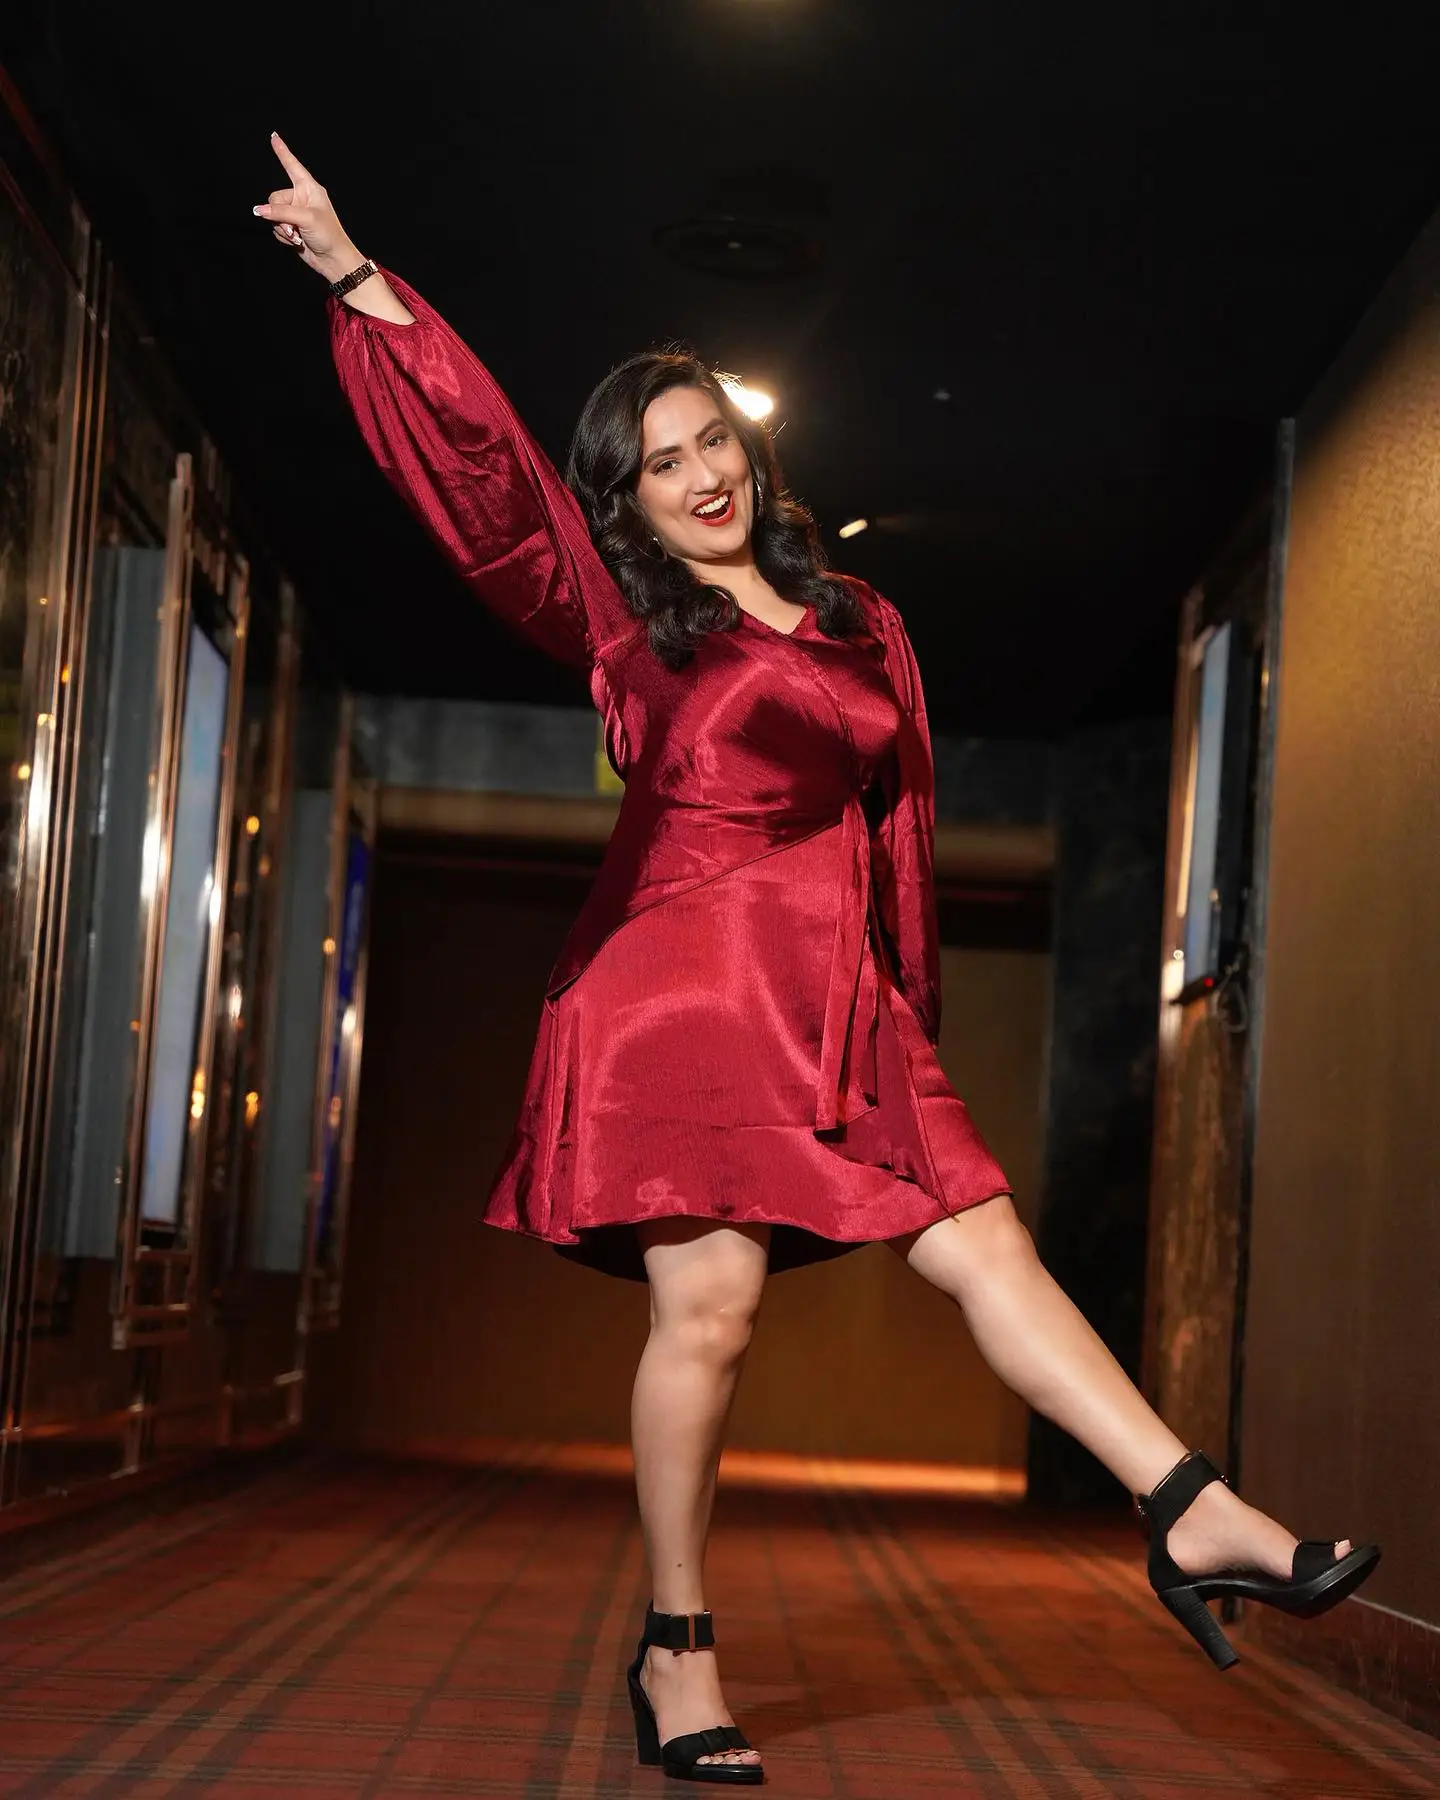 Indian TV Actress Rampalli Manjusha Long Legs Show in Maroon Gown